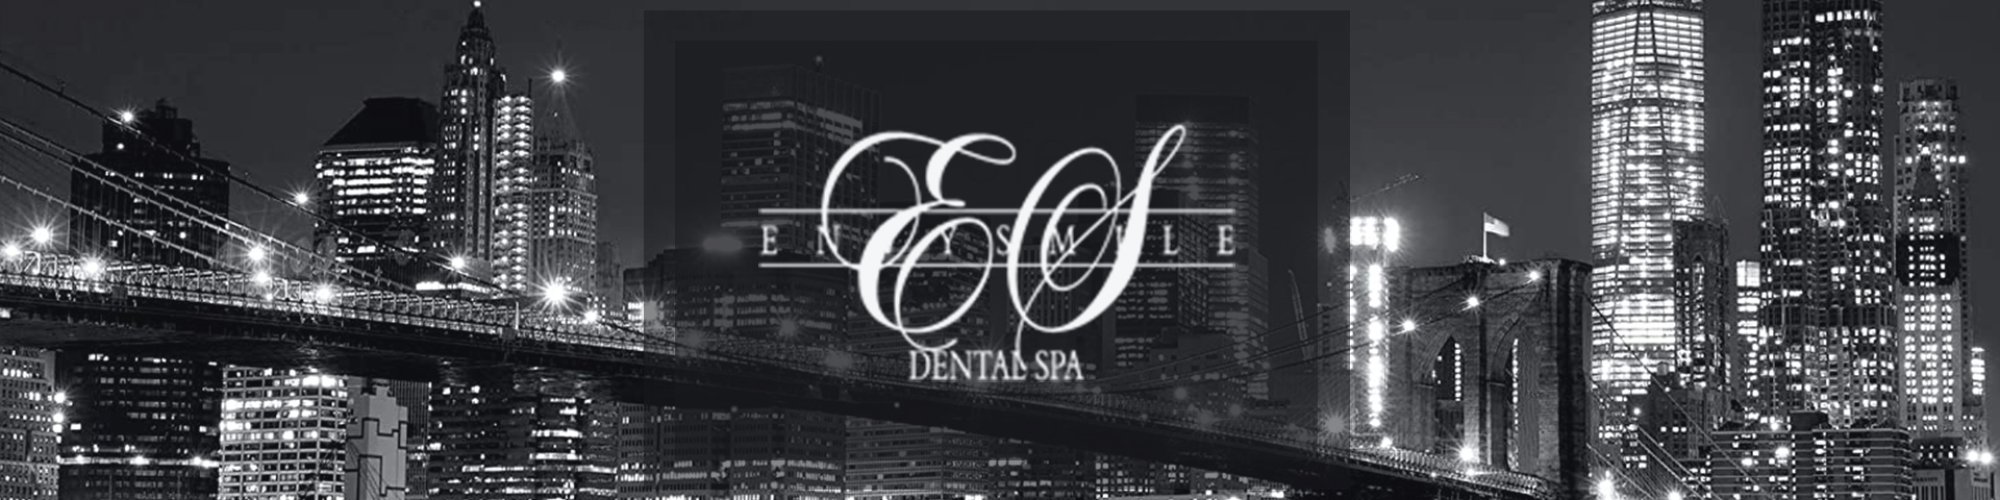 Envy Smile Dental Spa